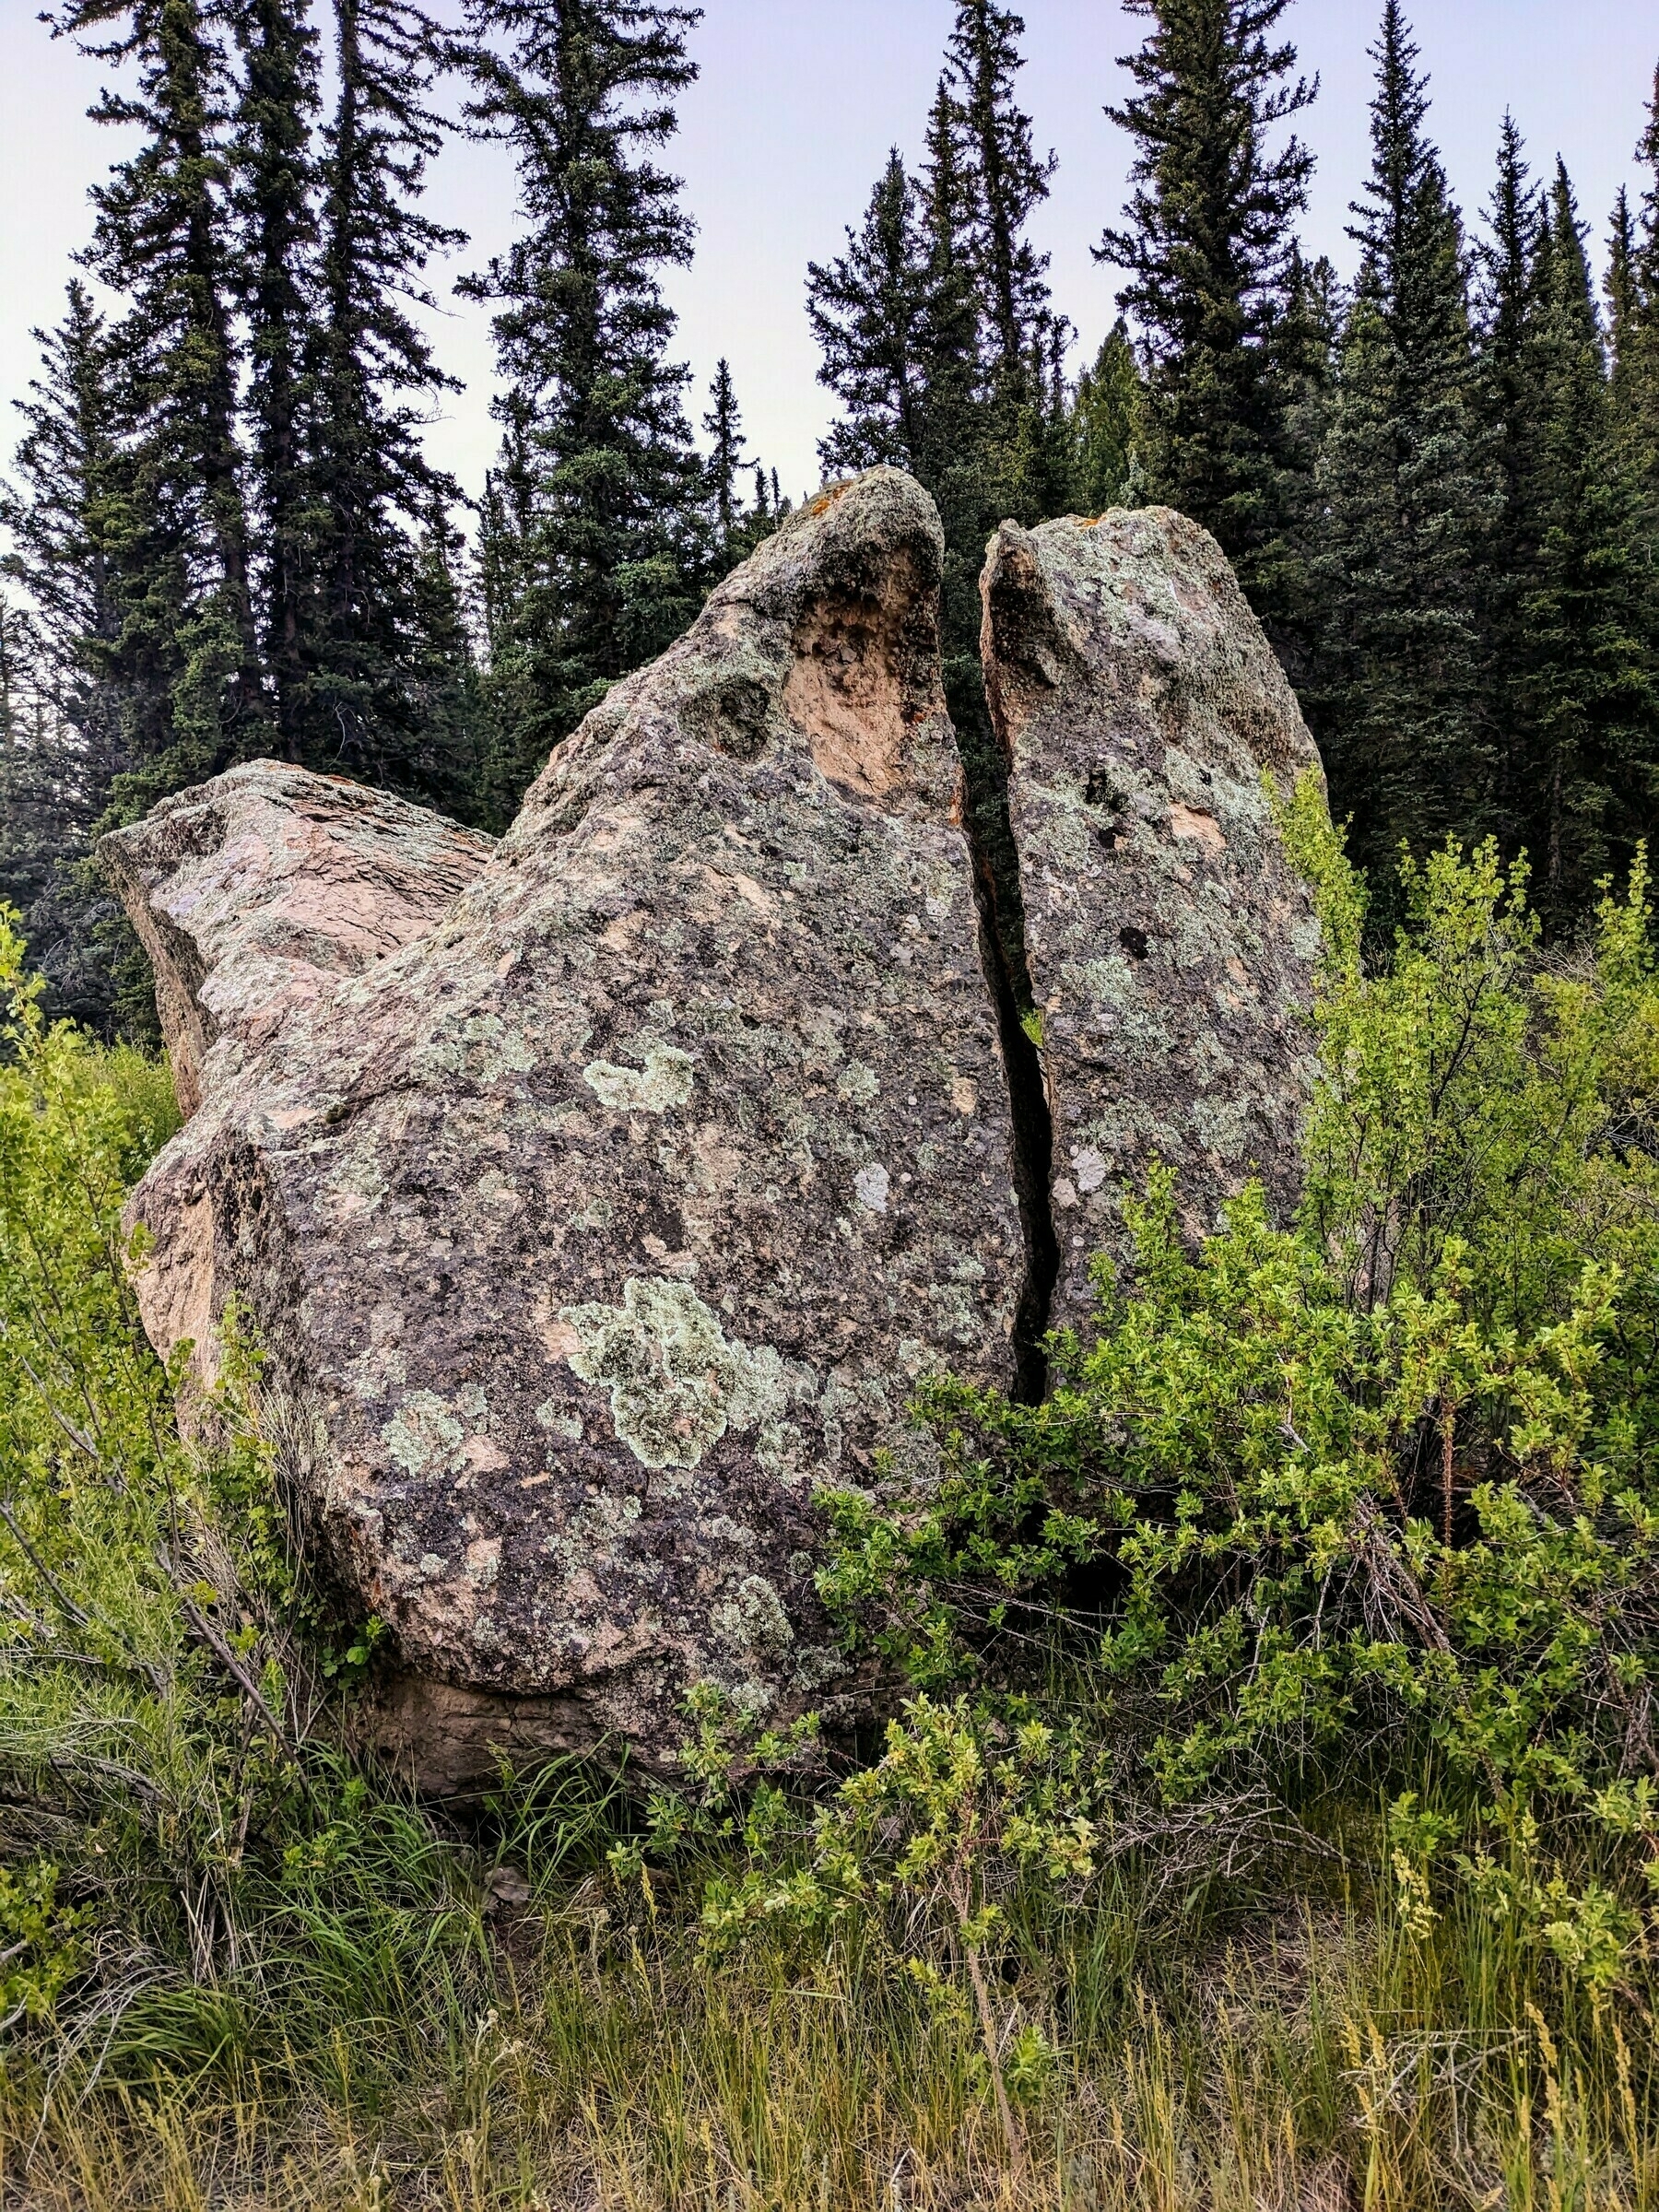 Rocks that look like sculptures by Henry Moore